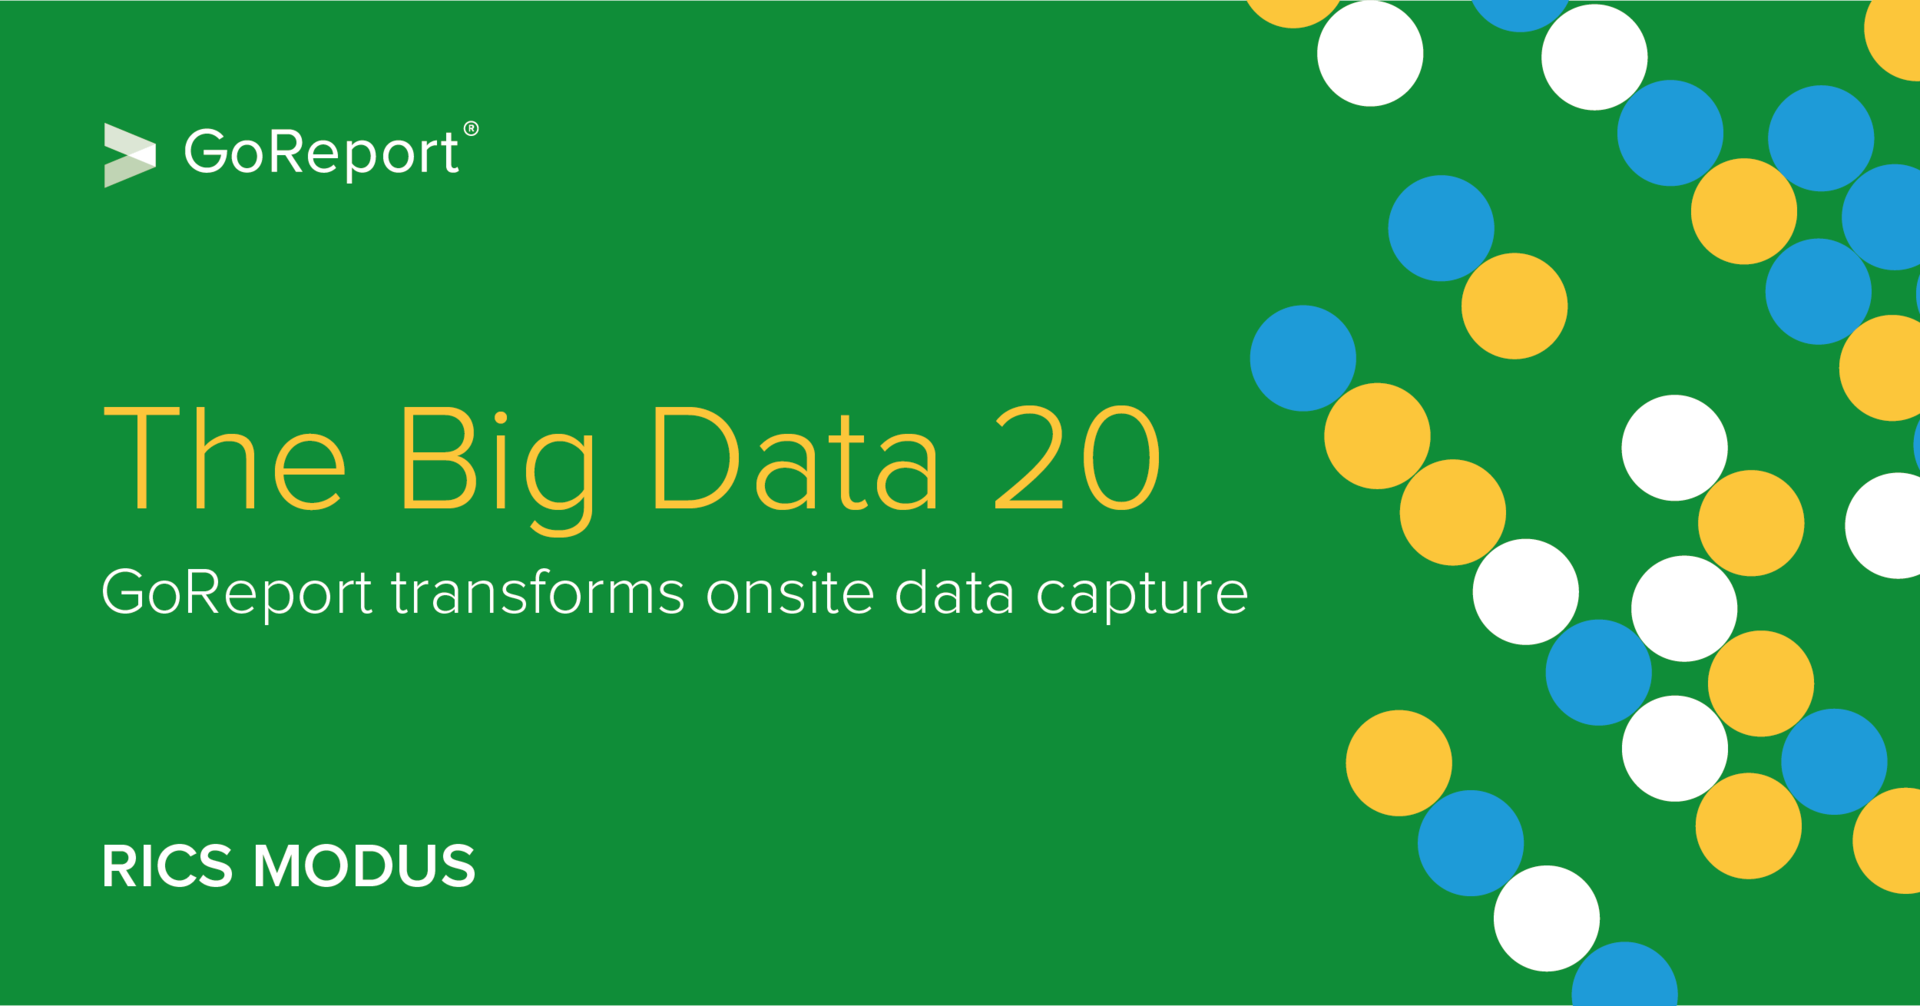 RICS Modus: The Big Data 20